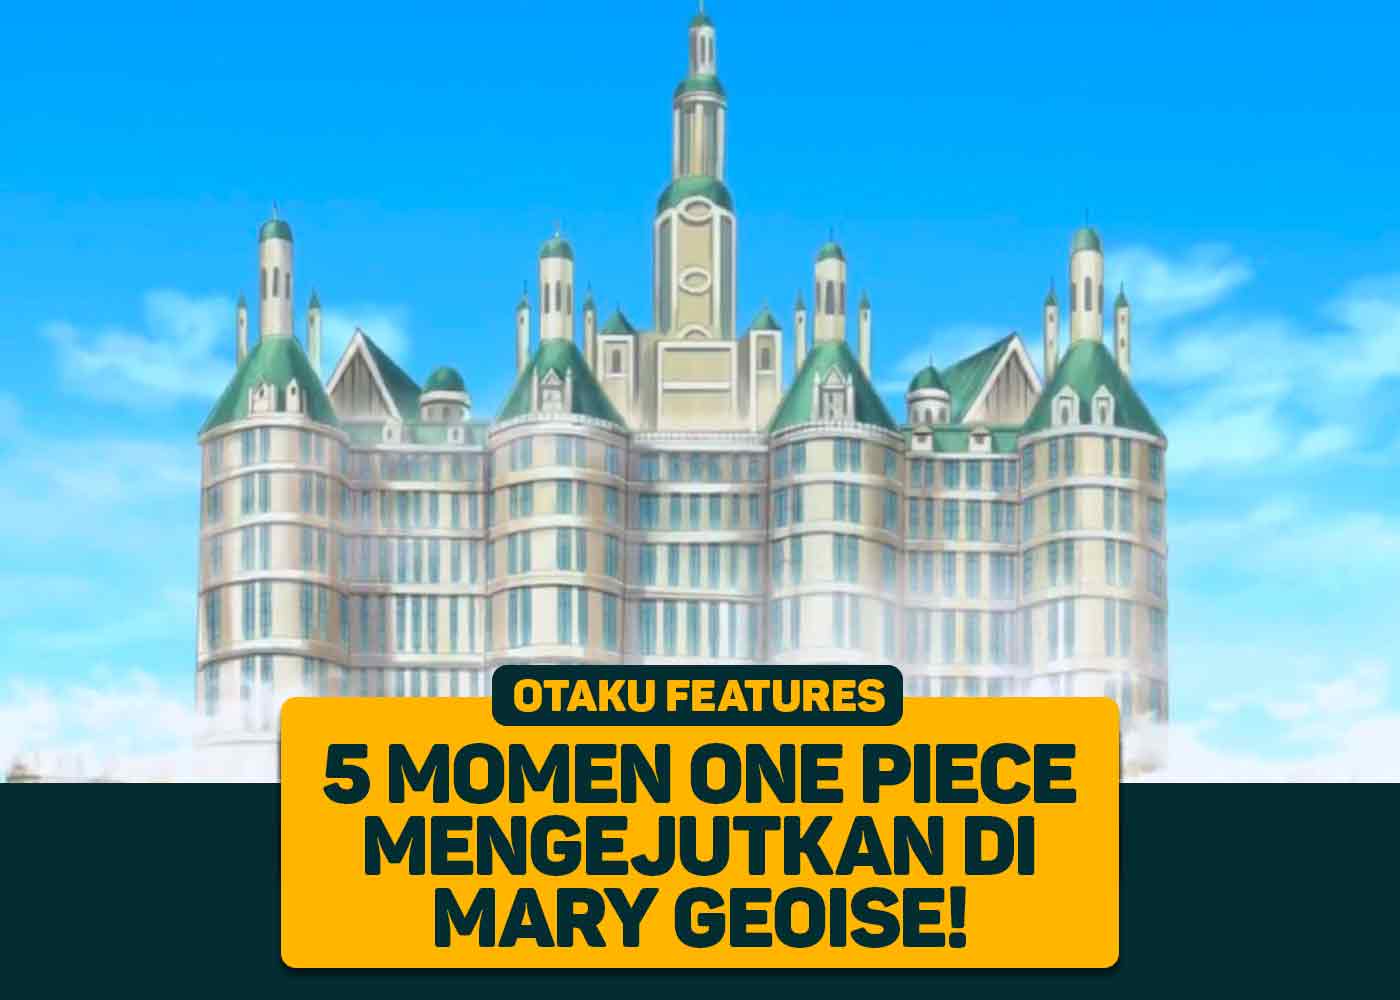 One Piece: 5 Momen Mengejutkan Di Mary Geoise!